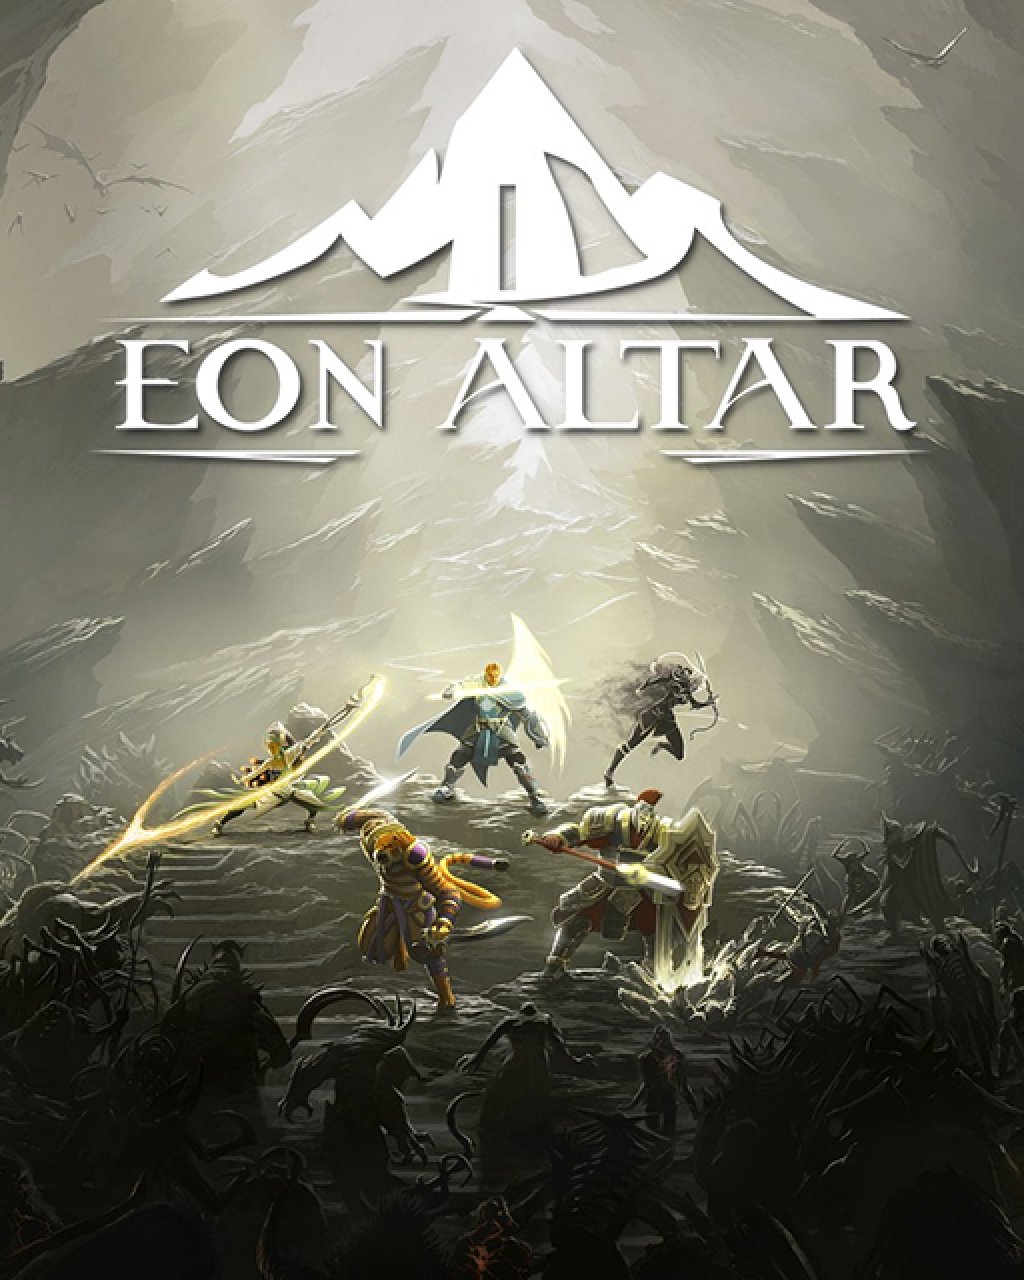 Eon Altar Season 1 Pass